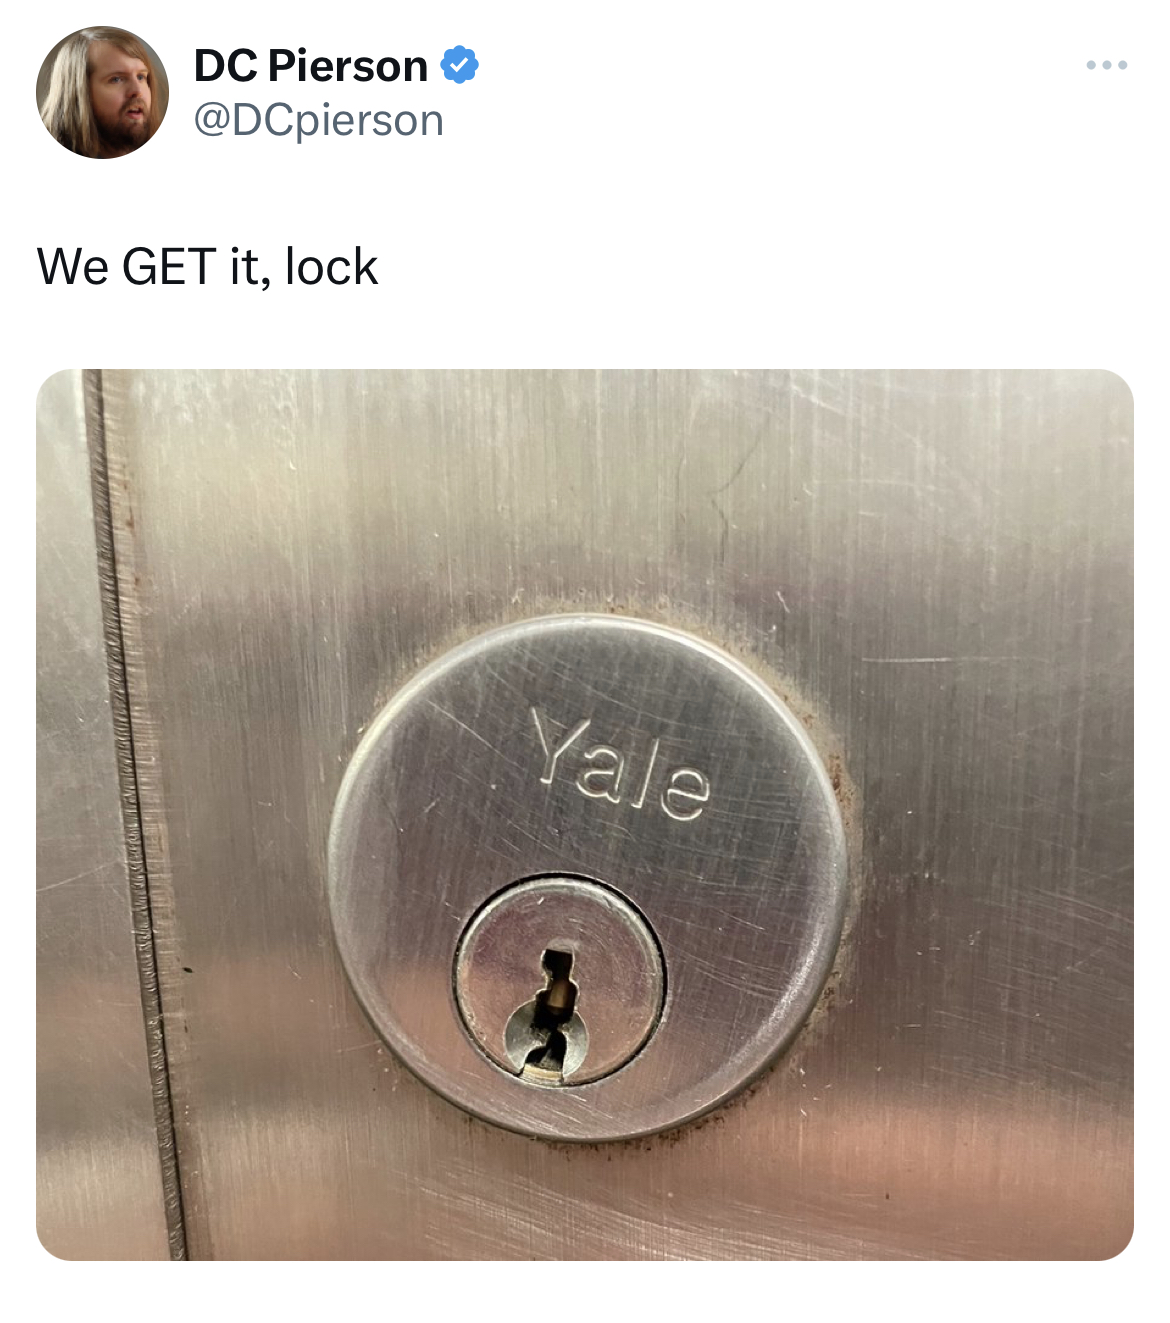 savage tweets - lock - Dc Pierson We Get it, lock Yale www